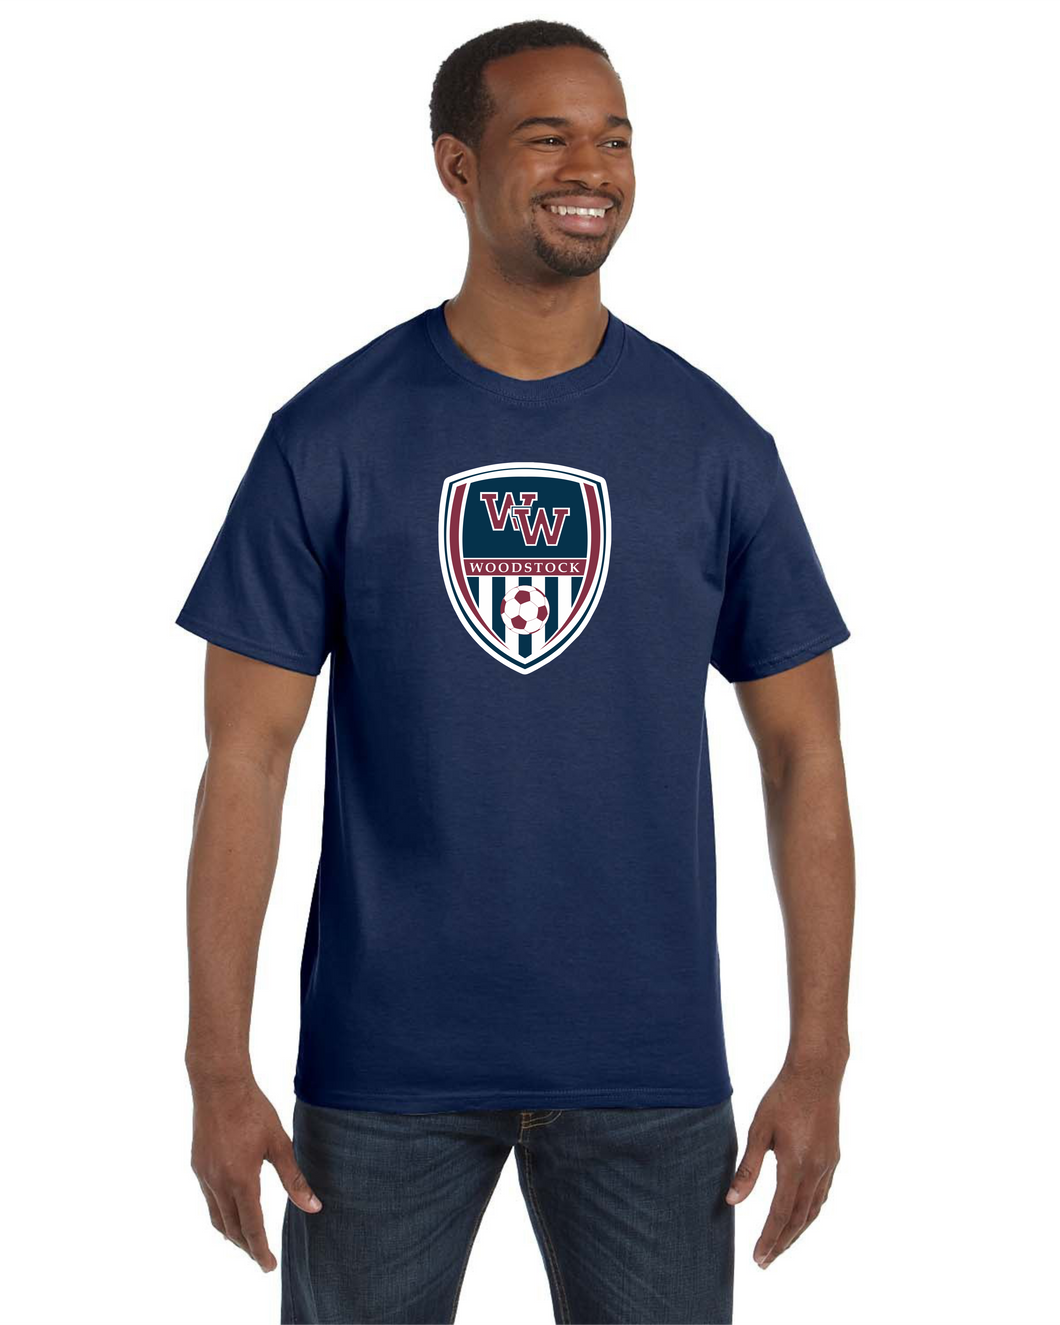 WW-SOC-535-1- Jerzees Dri-Power Short Sleeve T-Shirt - WHS Soccer Shield Logo